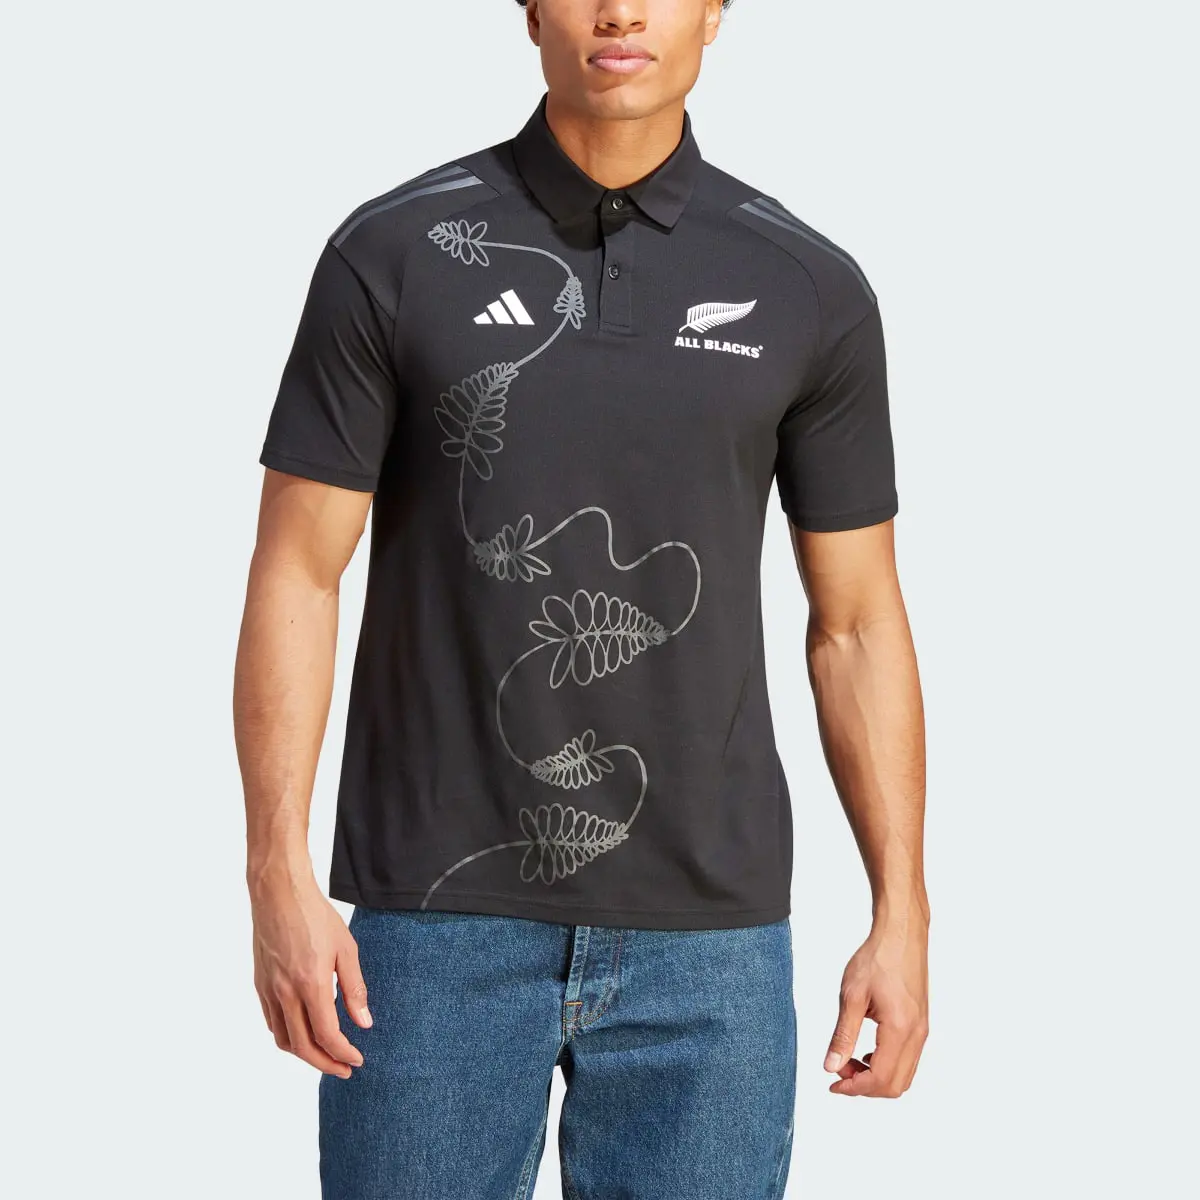 Adidas All Blacks Rugby Polo Shirt. 1